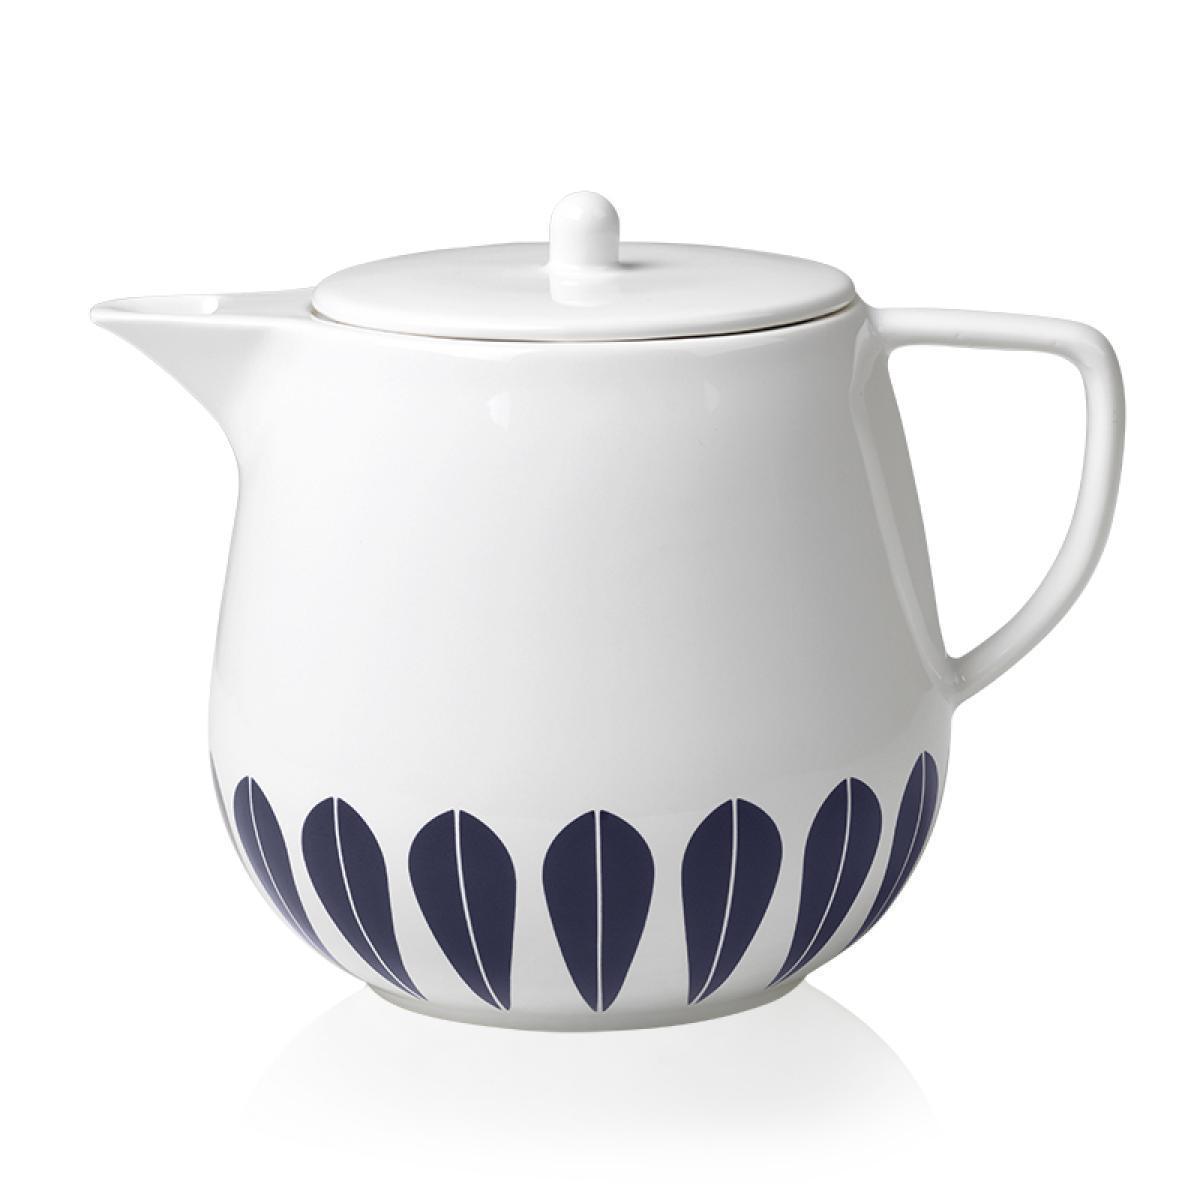 Lucie Kaas Arne Clausen Collection Teapot, mørkeblå